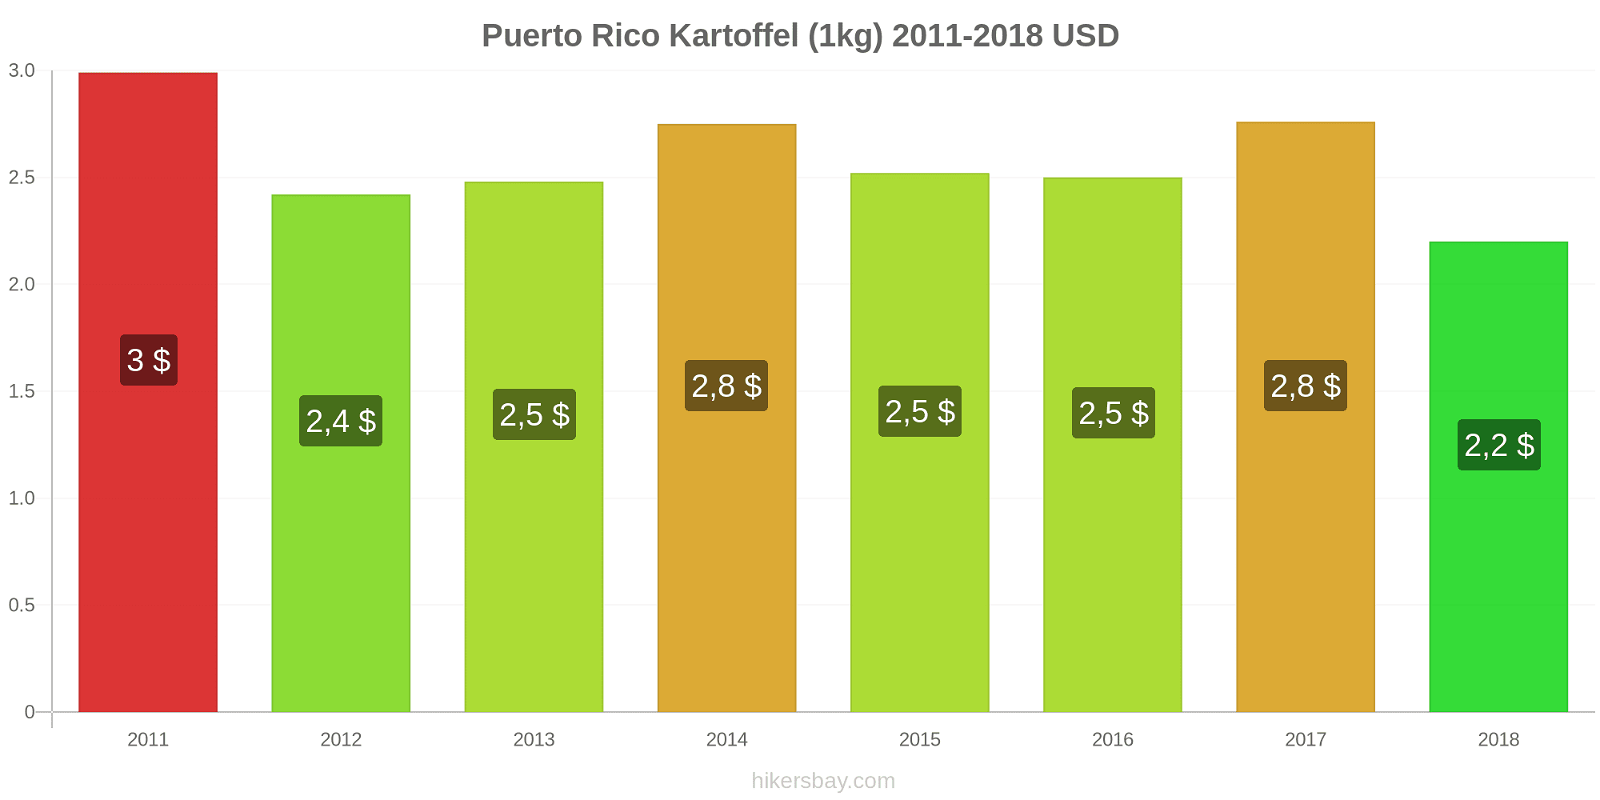 Puerto Rico Preisänderungen Kartoffeln (1kg) hikersbay.com